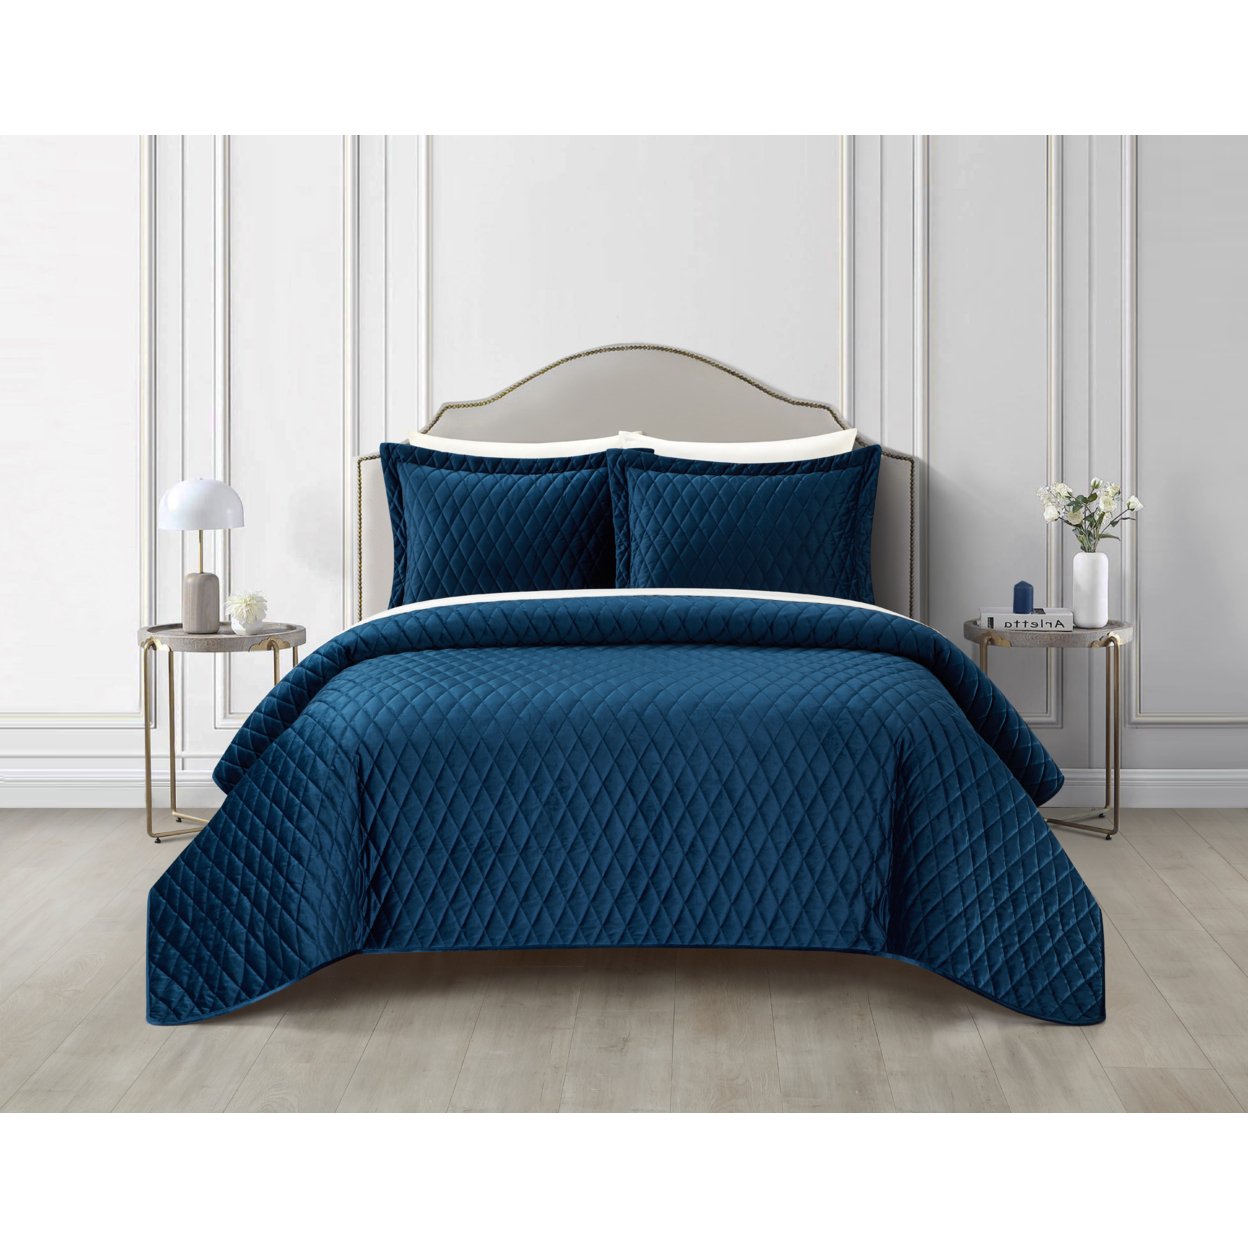 NY&C Home Dafa 3 Piece Velvet Quilt Set Diamond Stitched Pattern Bedding - Blue, King